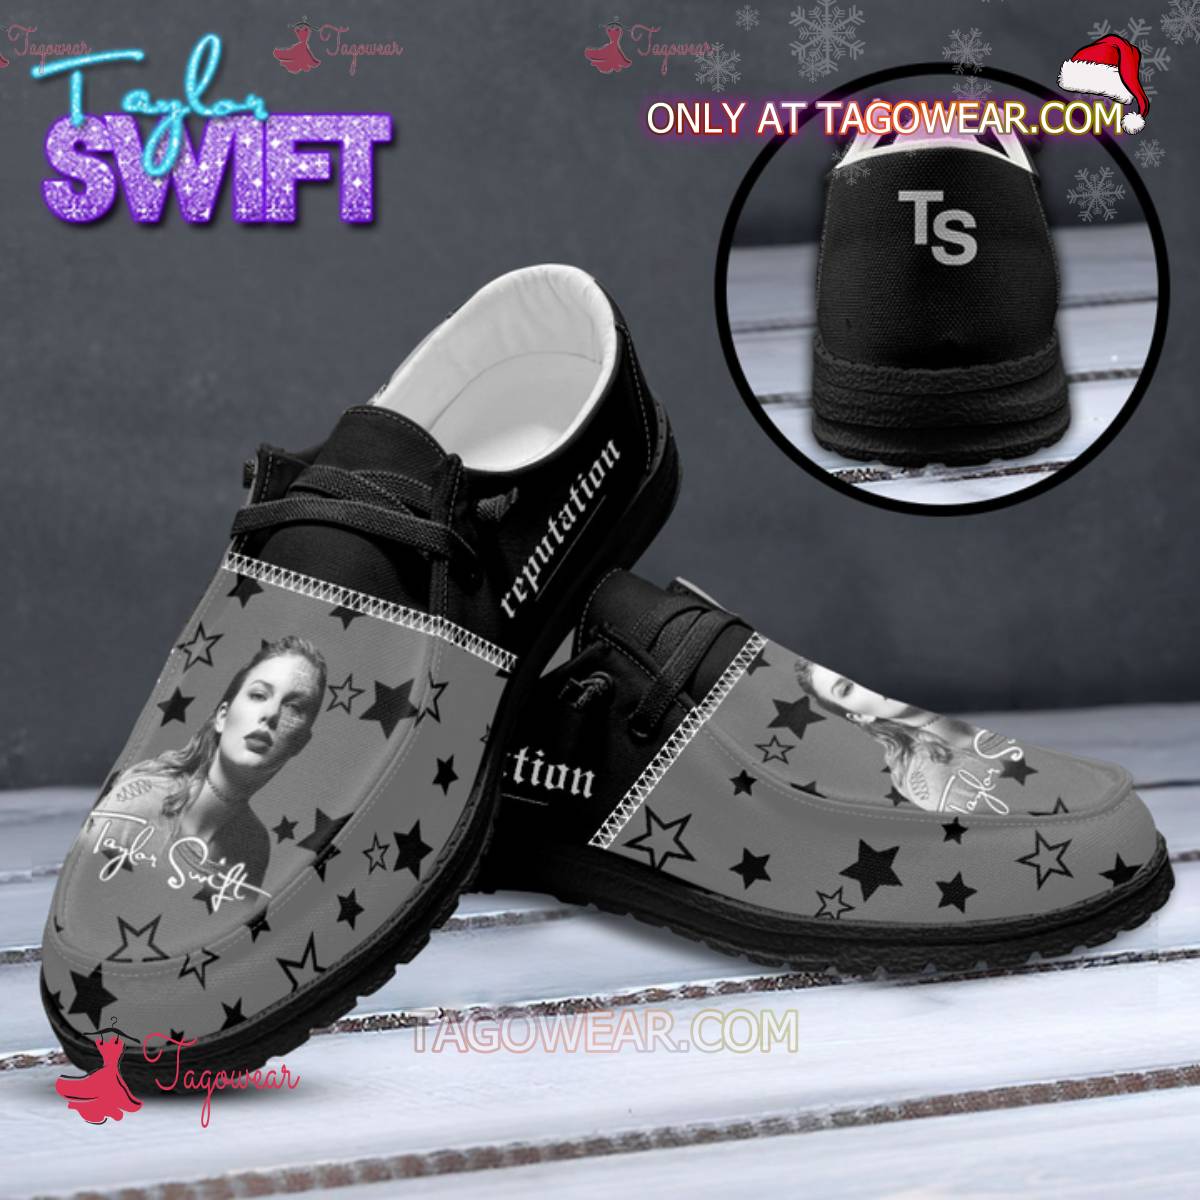 Taylor Swift Reputation Shoes - Tagowear